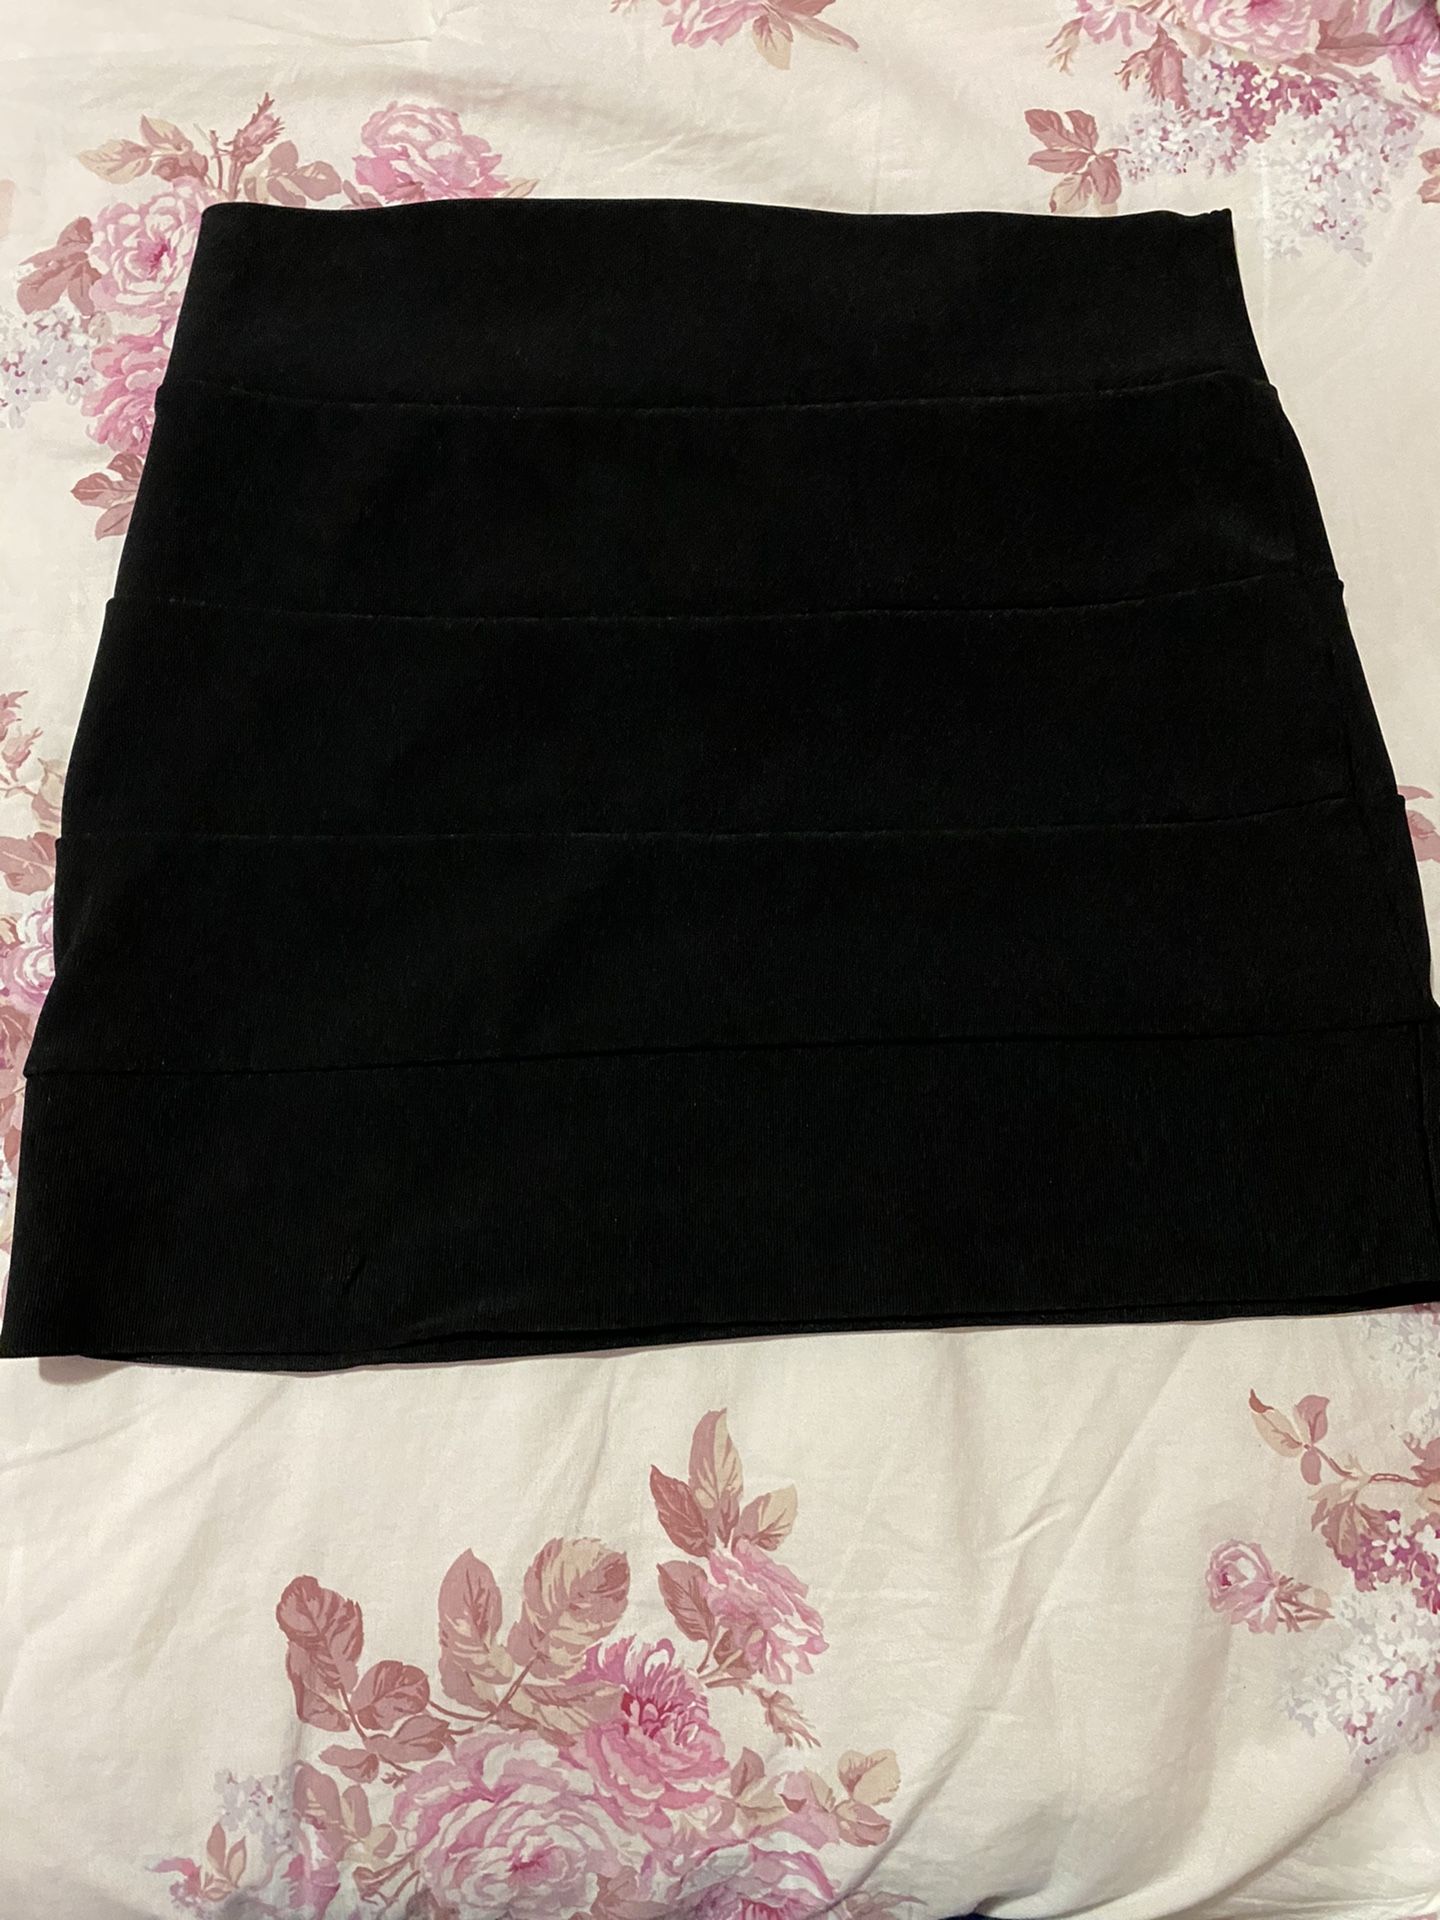 Lightly Worn Black Pencil Skirt $4